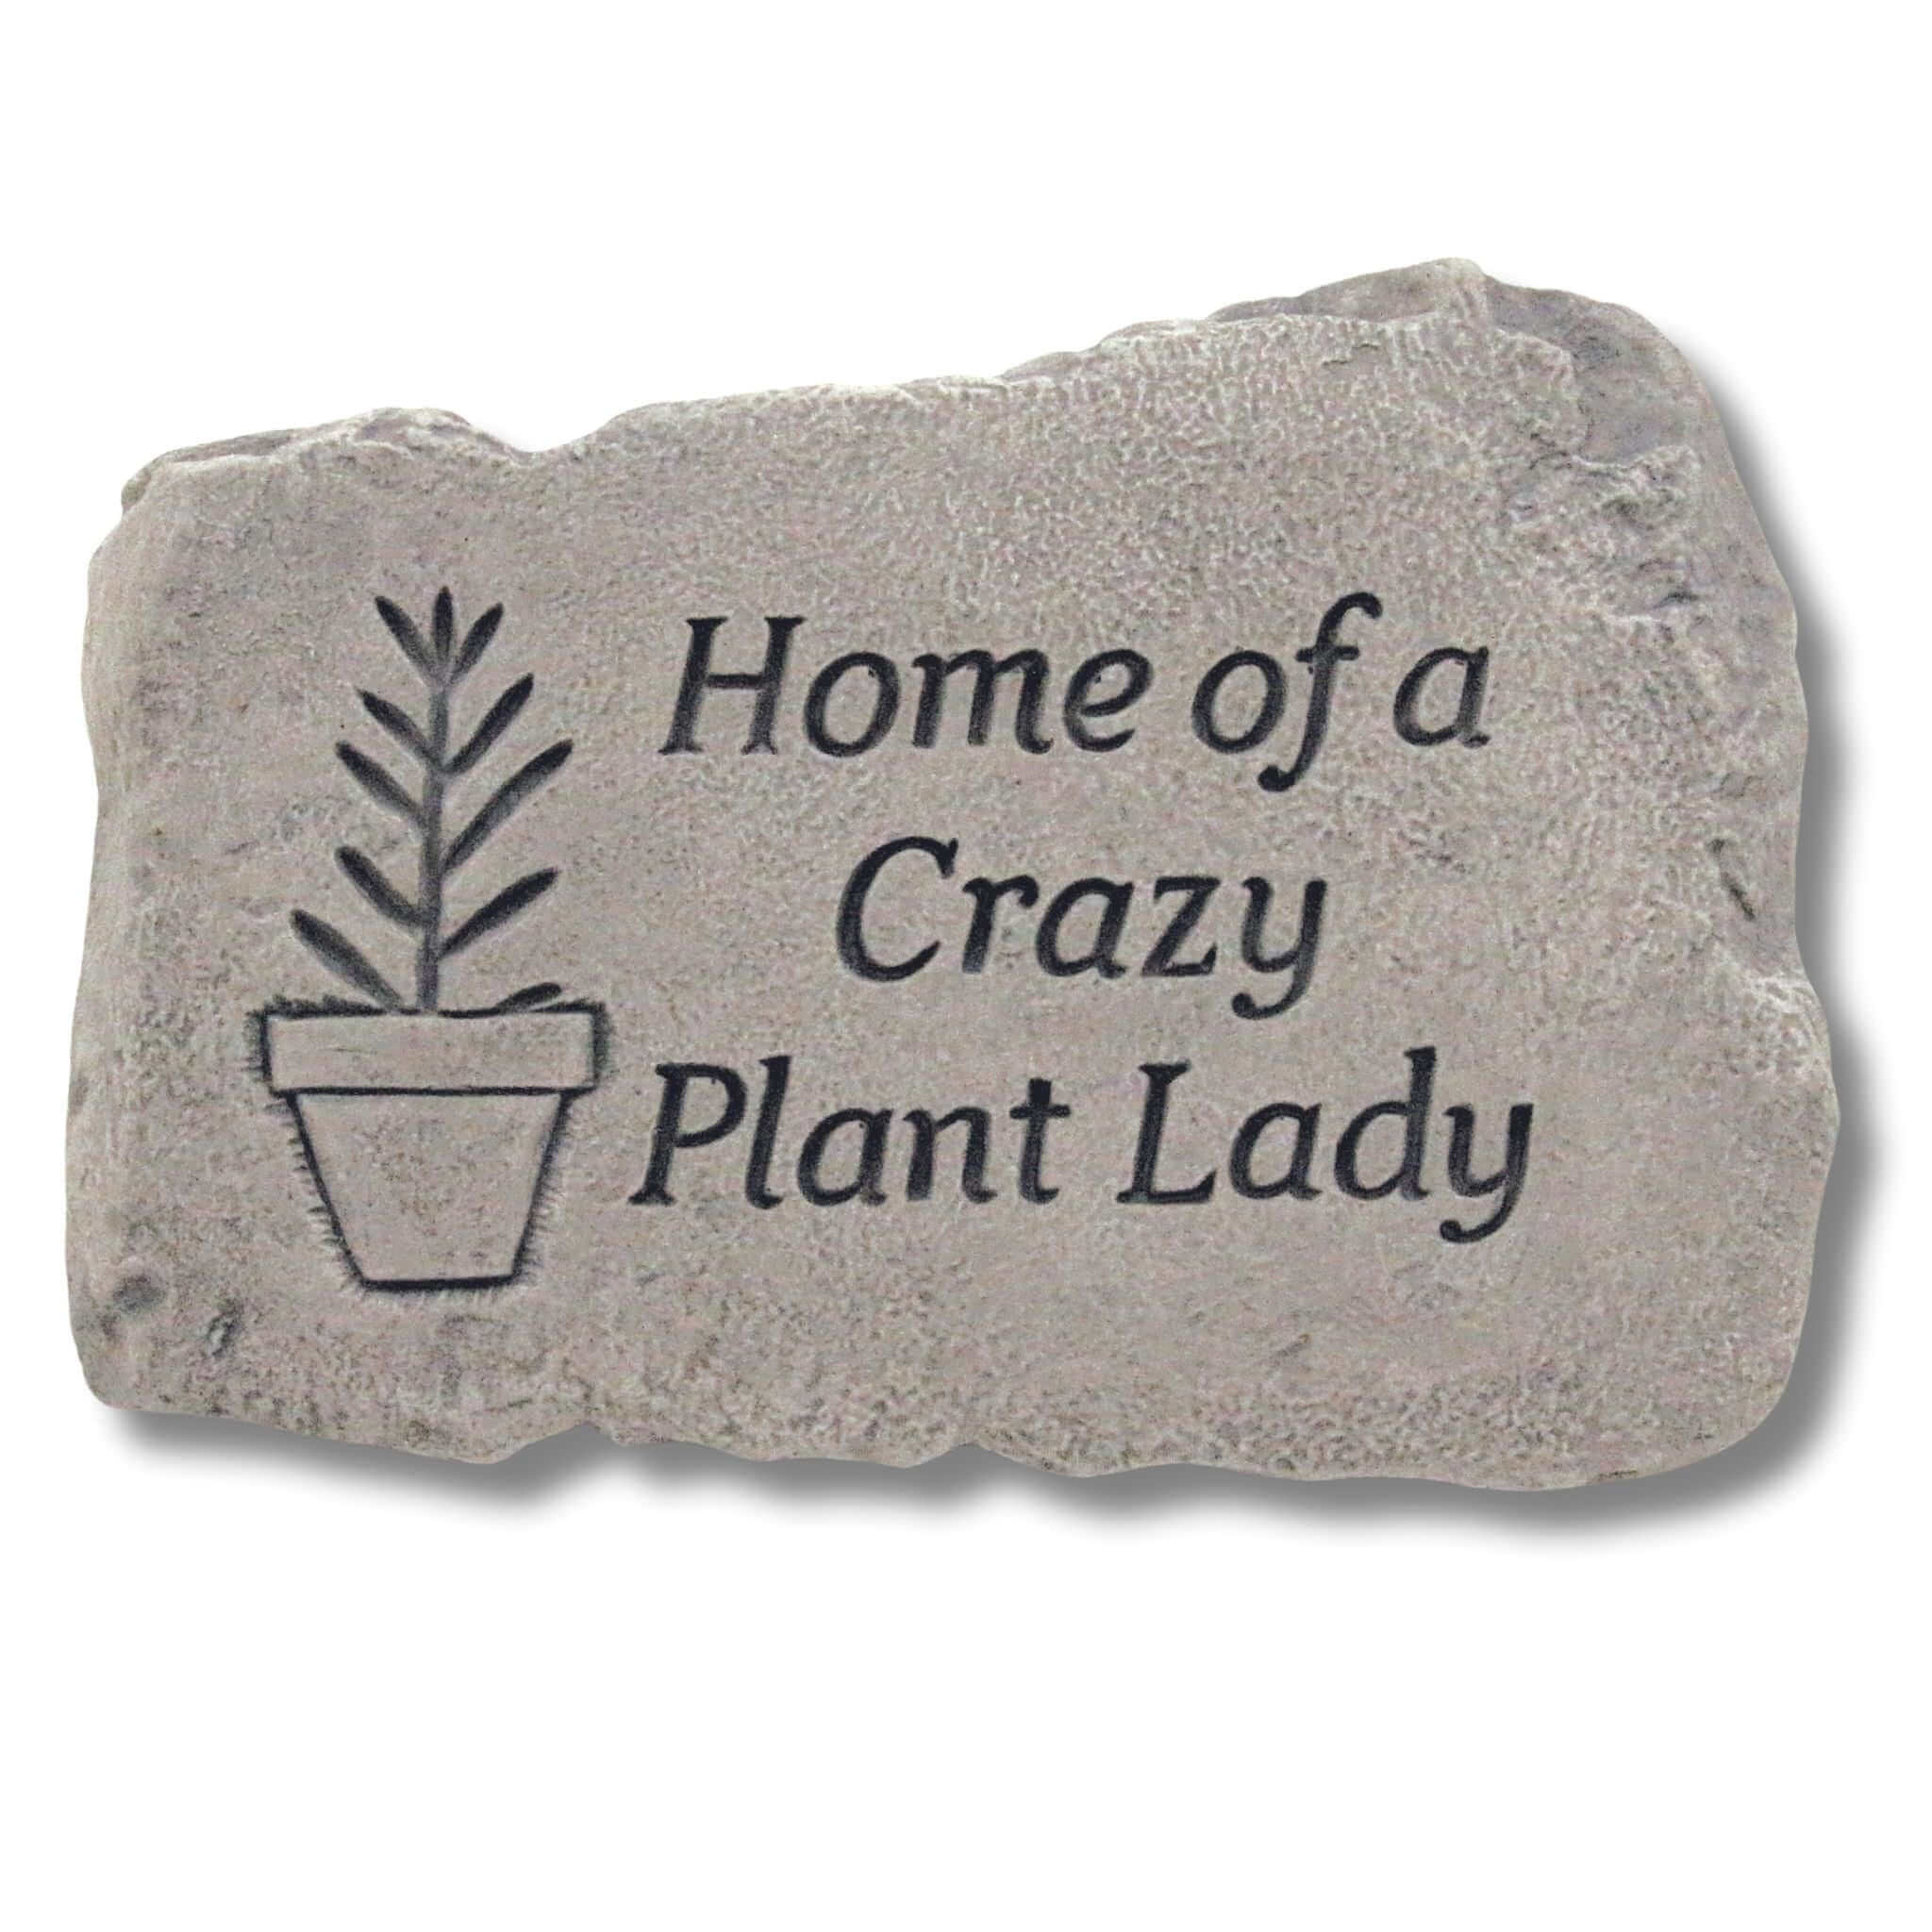 Crazy Plant Lady Concrete Garden Greeting Stone - Massarellis #1751